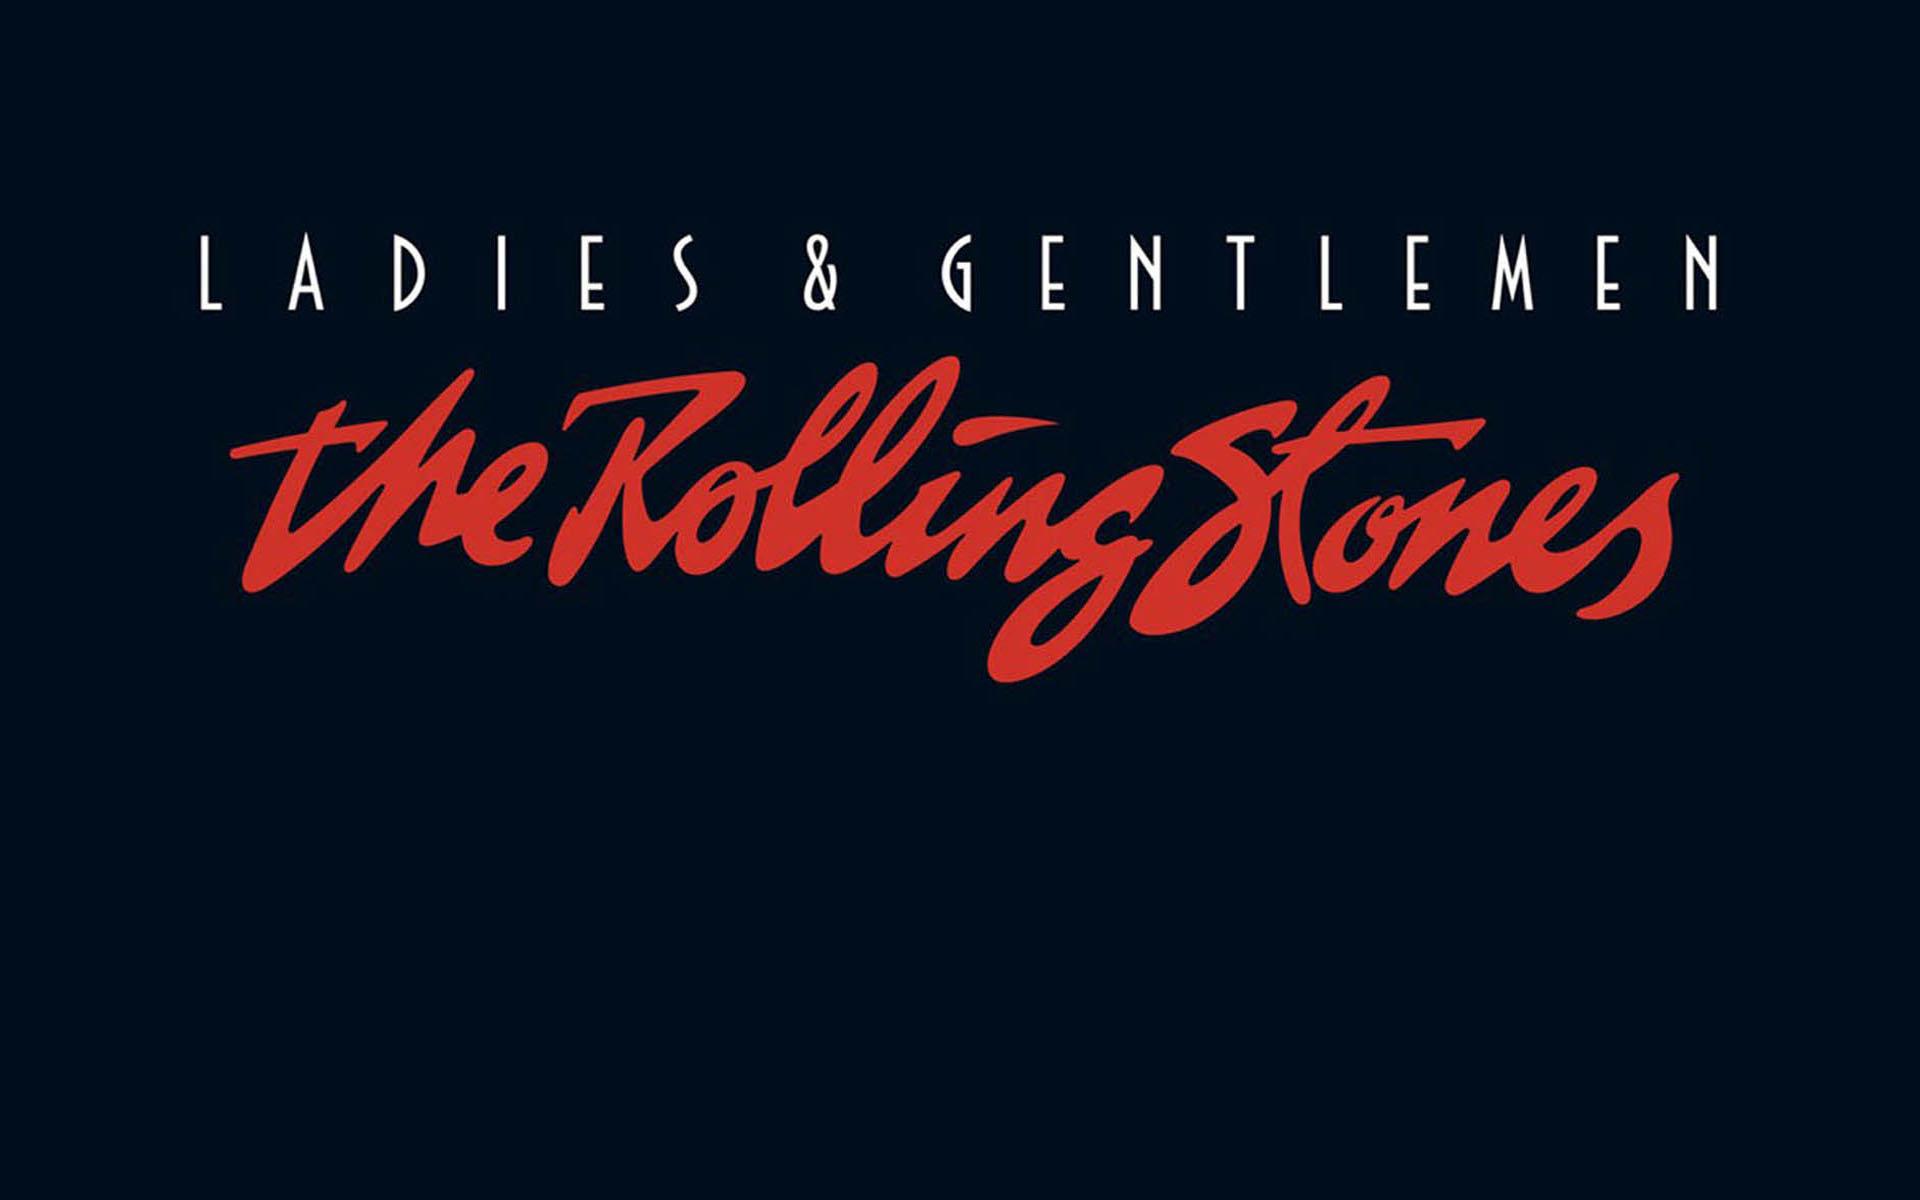 The Rolling Stones wallpaper HD for desktop background